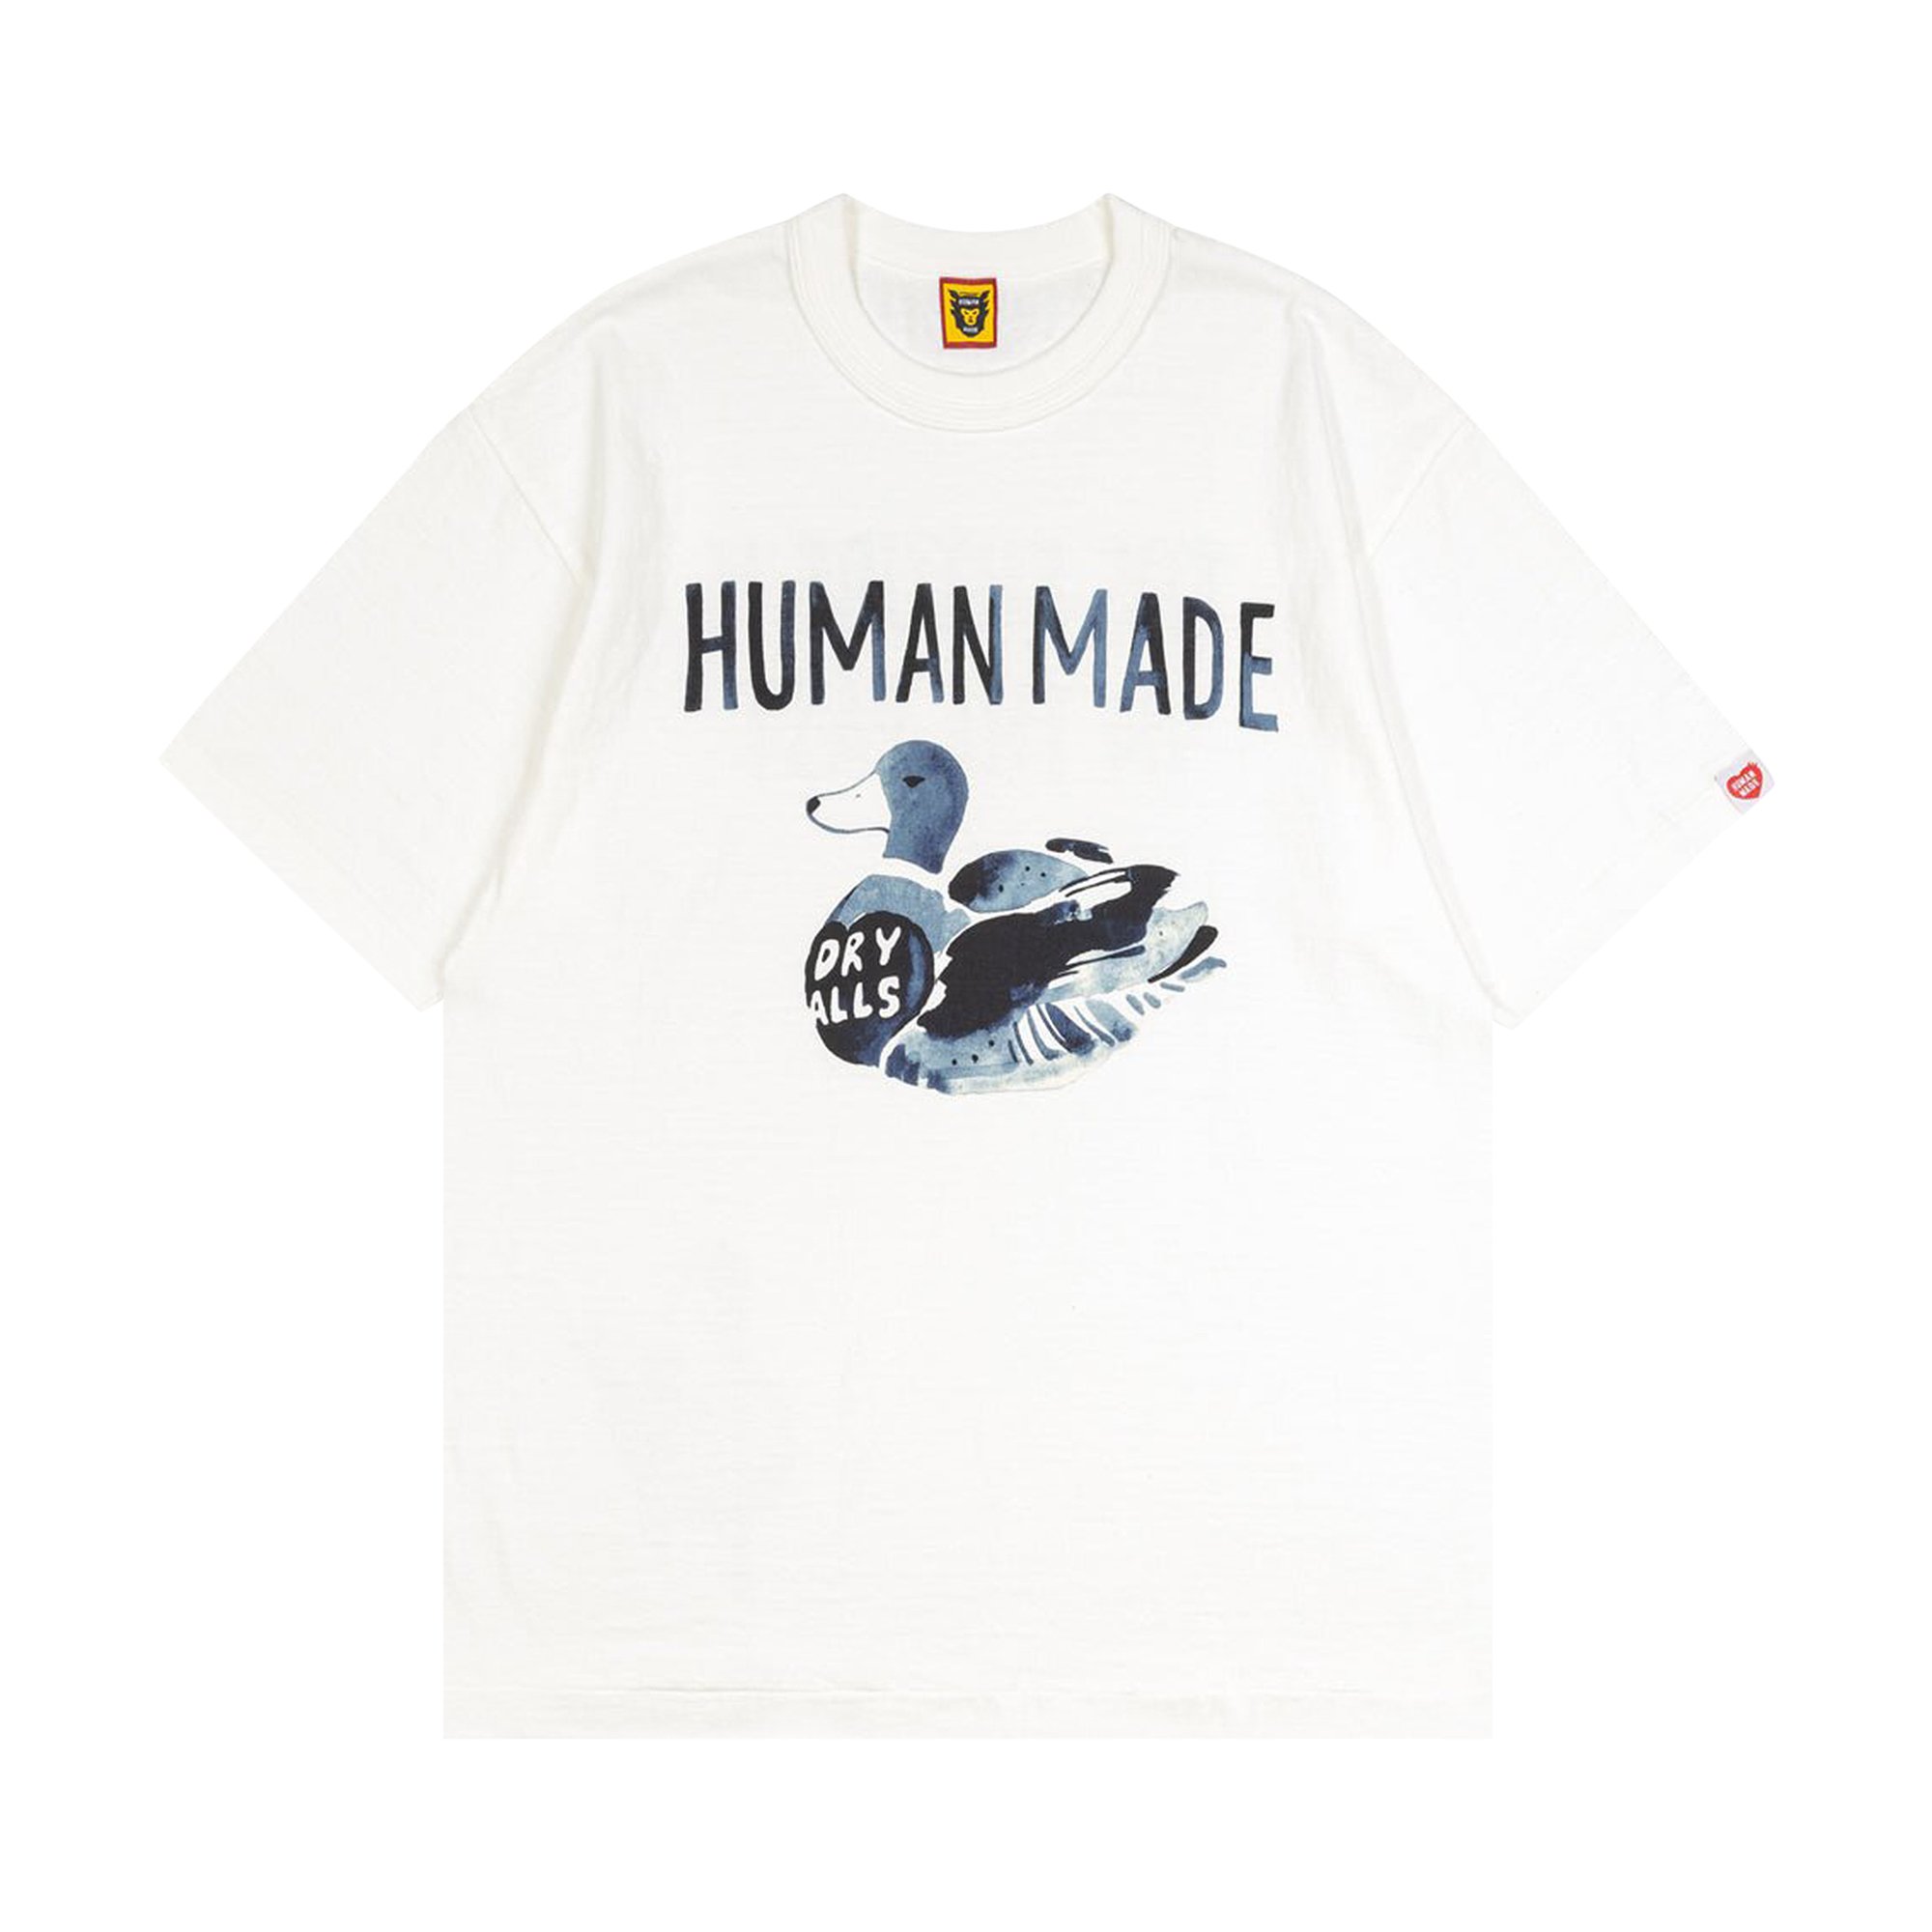 Buy Human Made Graphic T-Shirt 'White' - HM25TE022 WHIT | GOAT IT